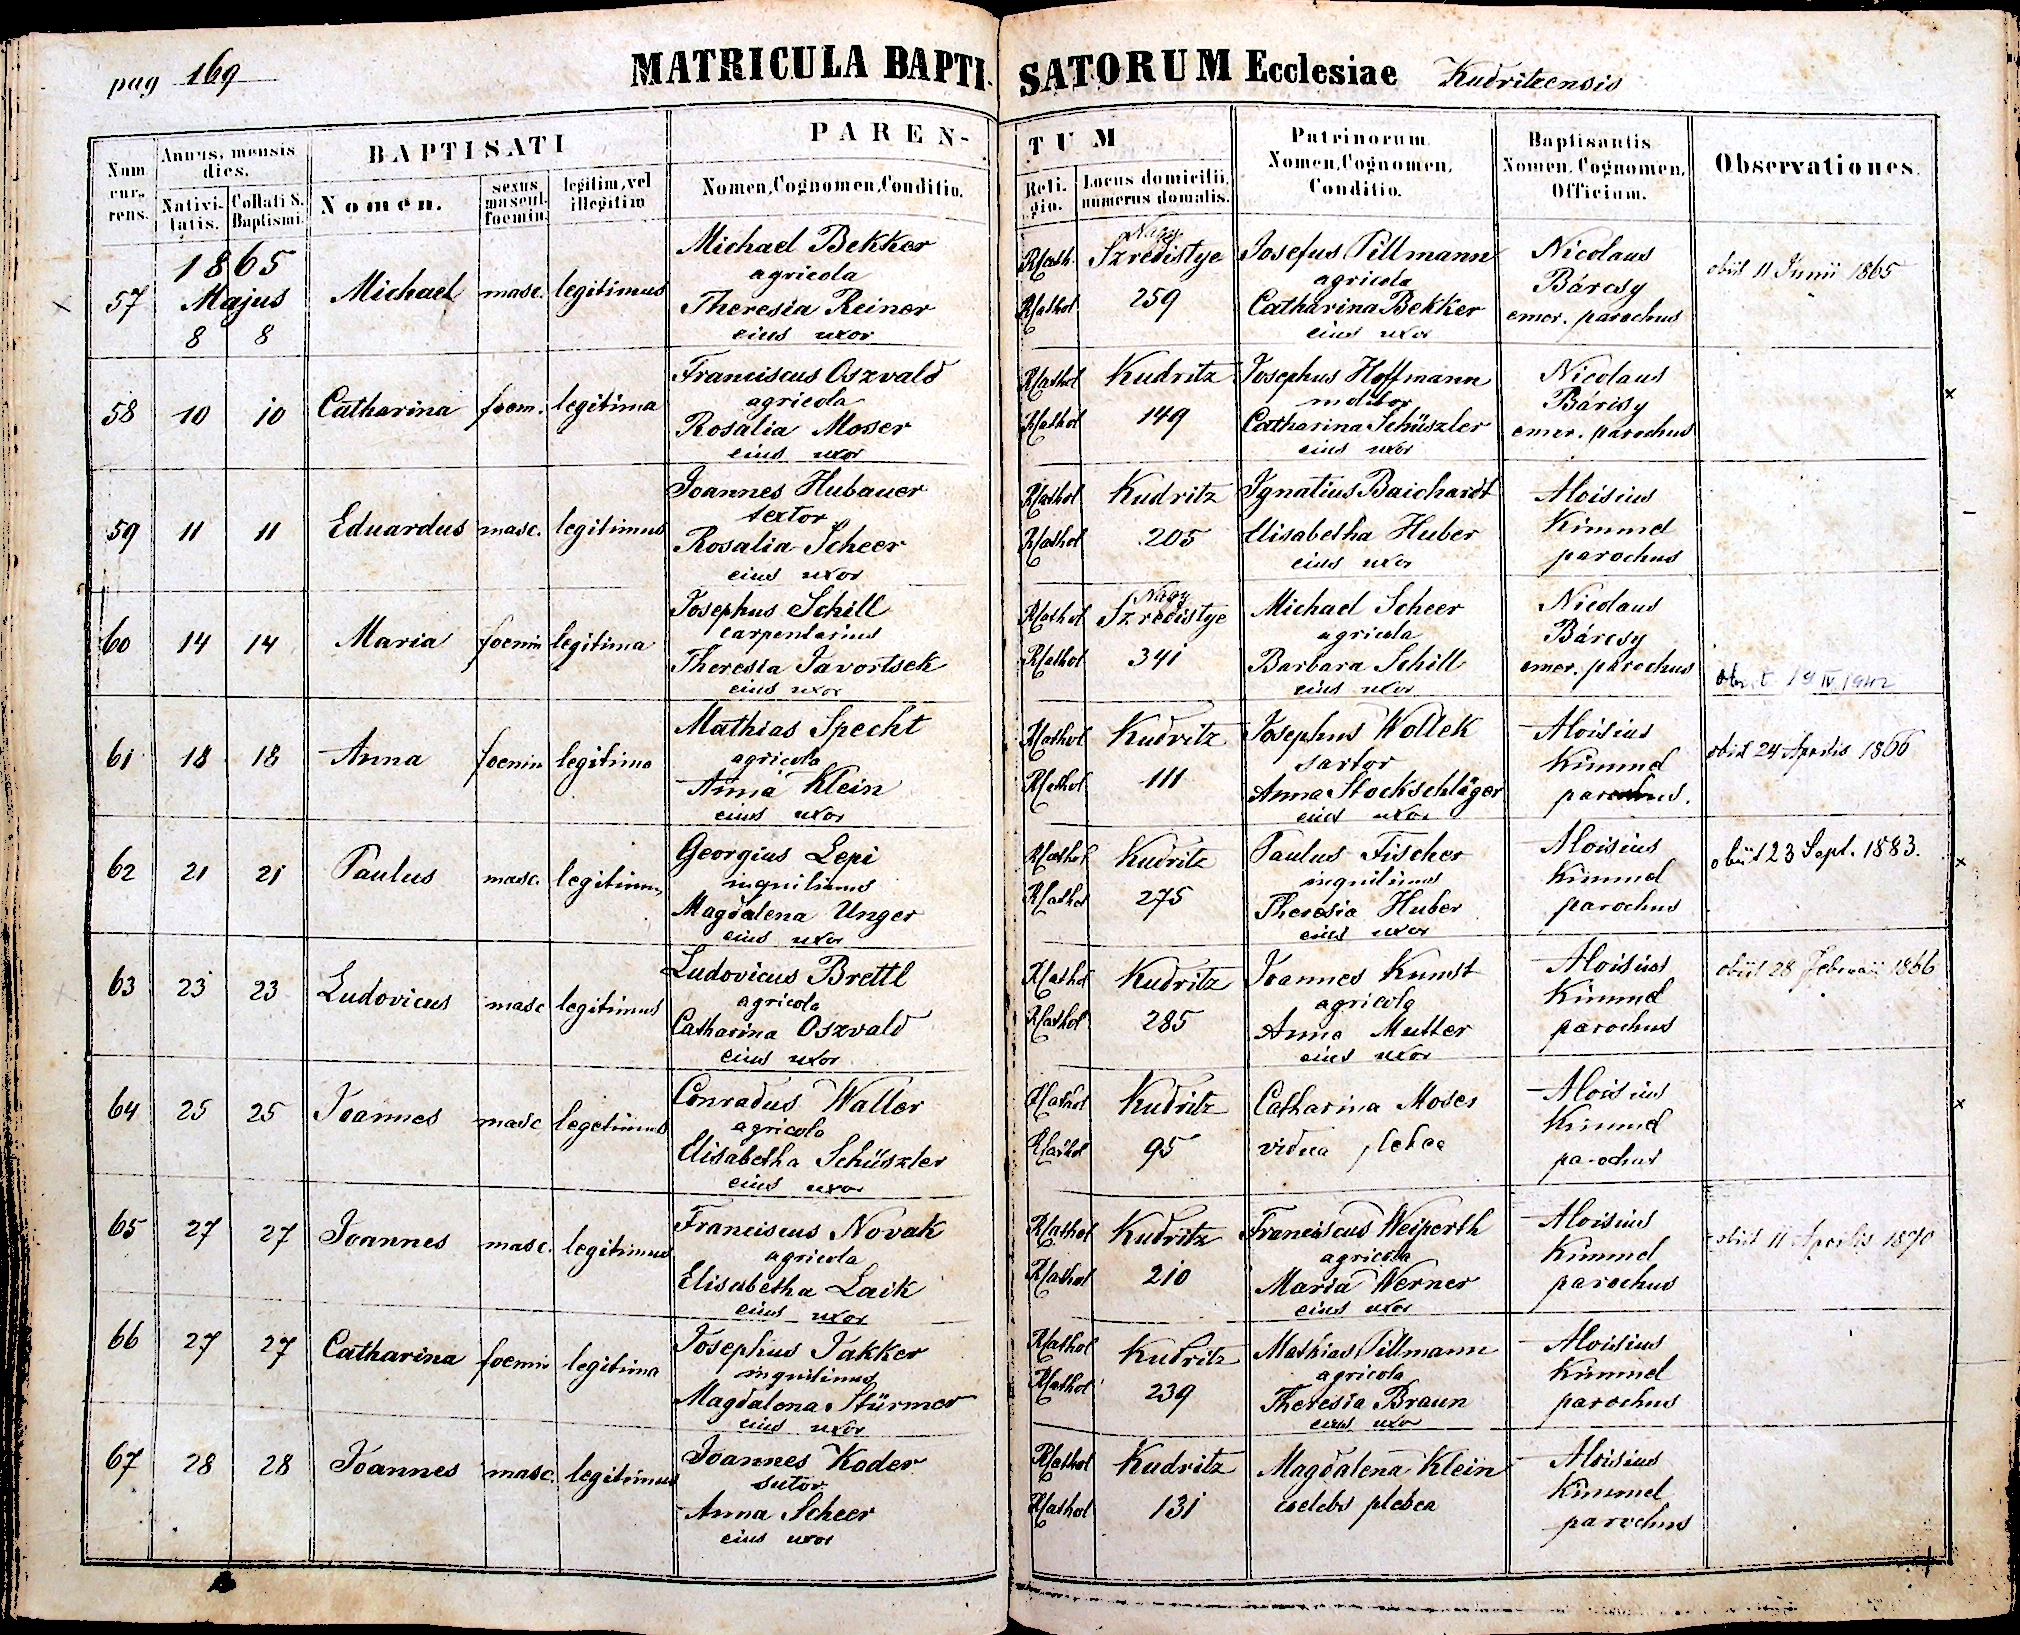 images/church_records/BIRTHS/1852-1870B/169